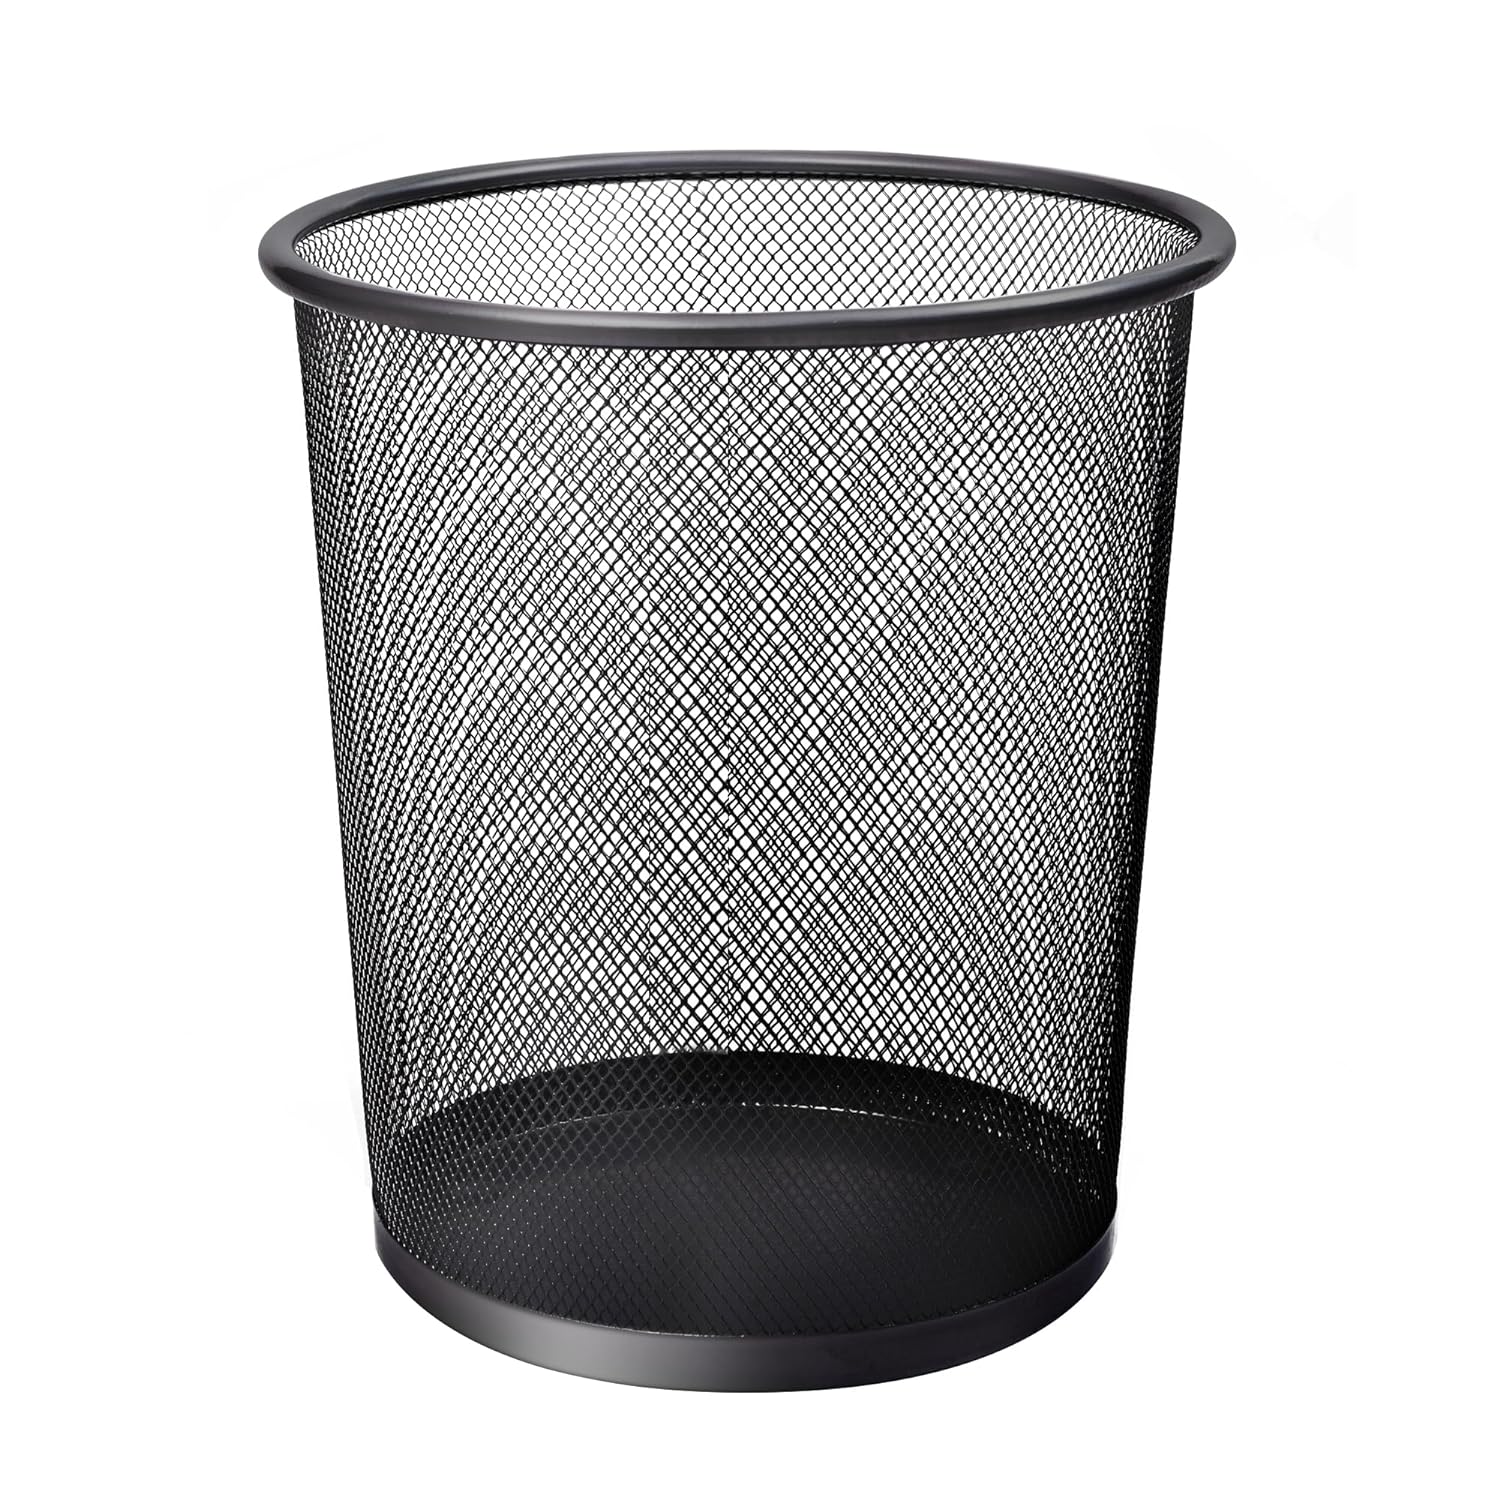 KEPLIN Round Trash Can - Black Non-slip Mesh Bin, Stylish & Sturdy Metal Waste Paper Bin for Home, Bedroom, Office, Bathroom, Living Room & Kitchen - Indoor Garbage Bin with Sleek Design